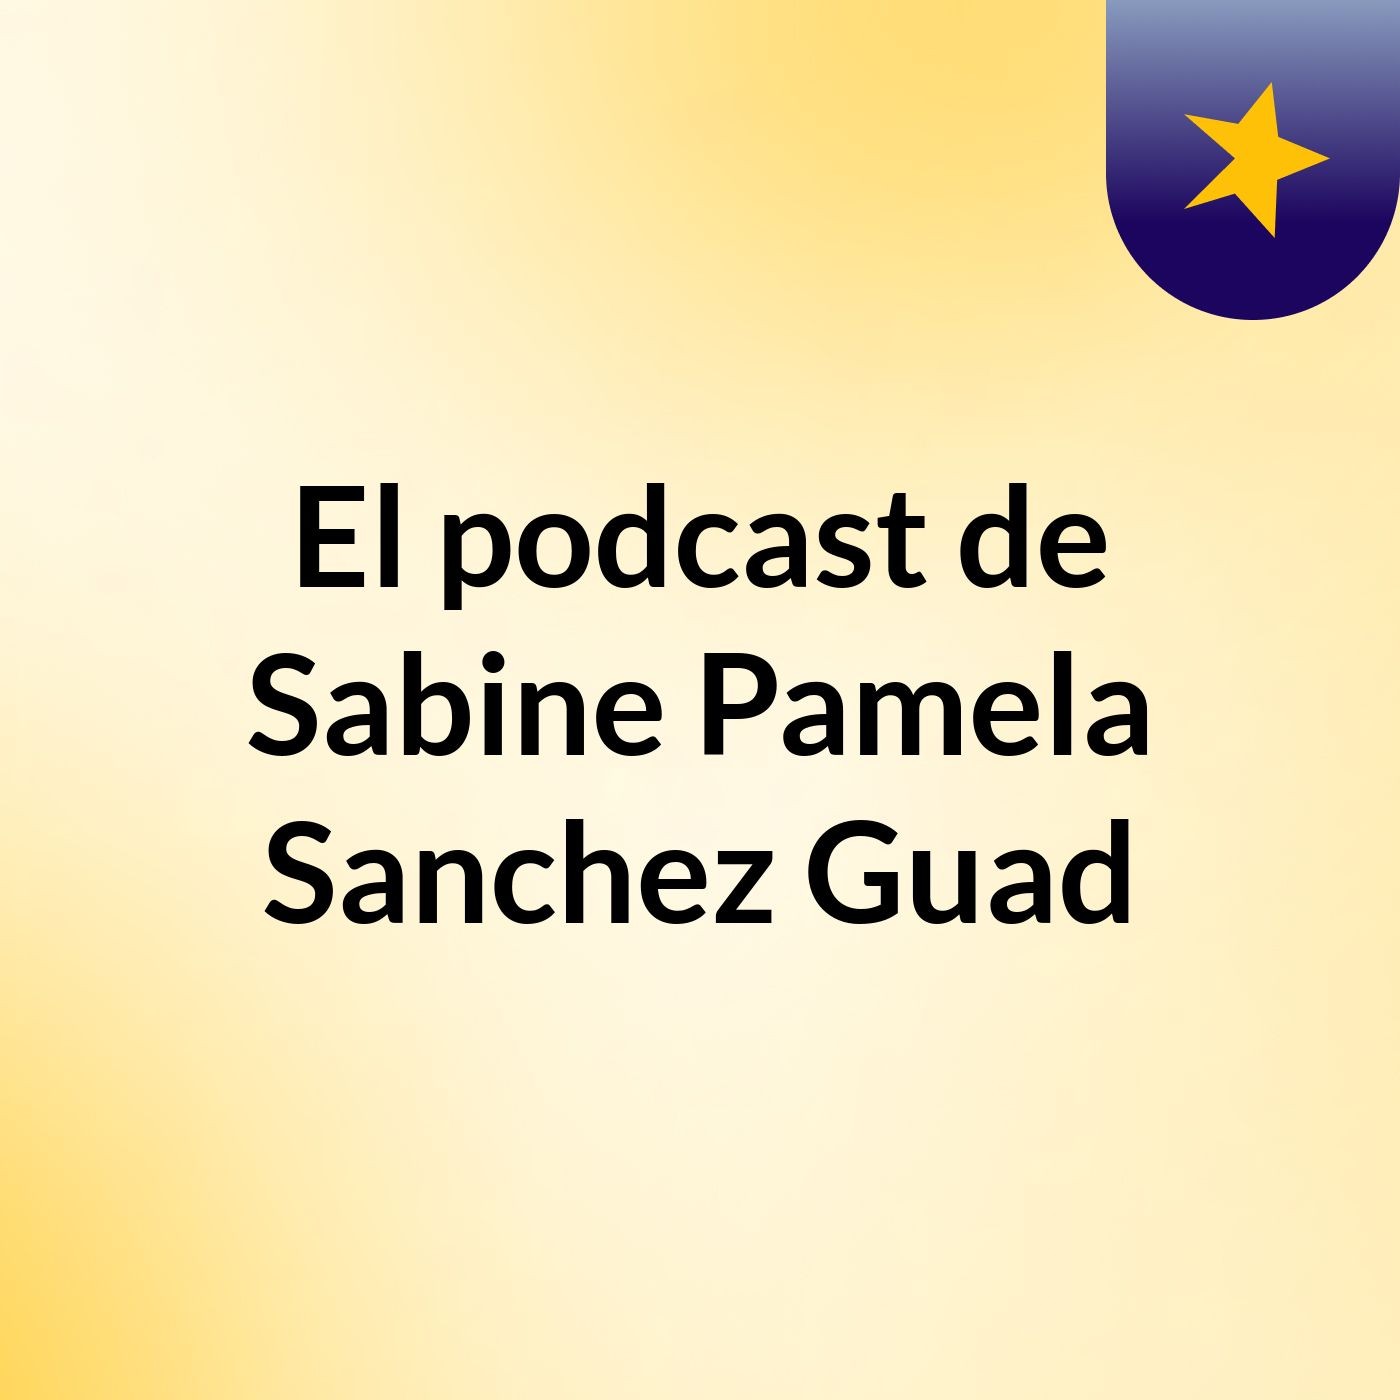 El podcast de Sabine Pamela Sanchez Guad